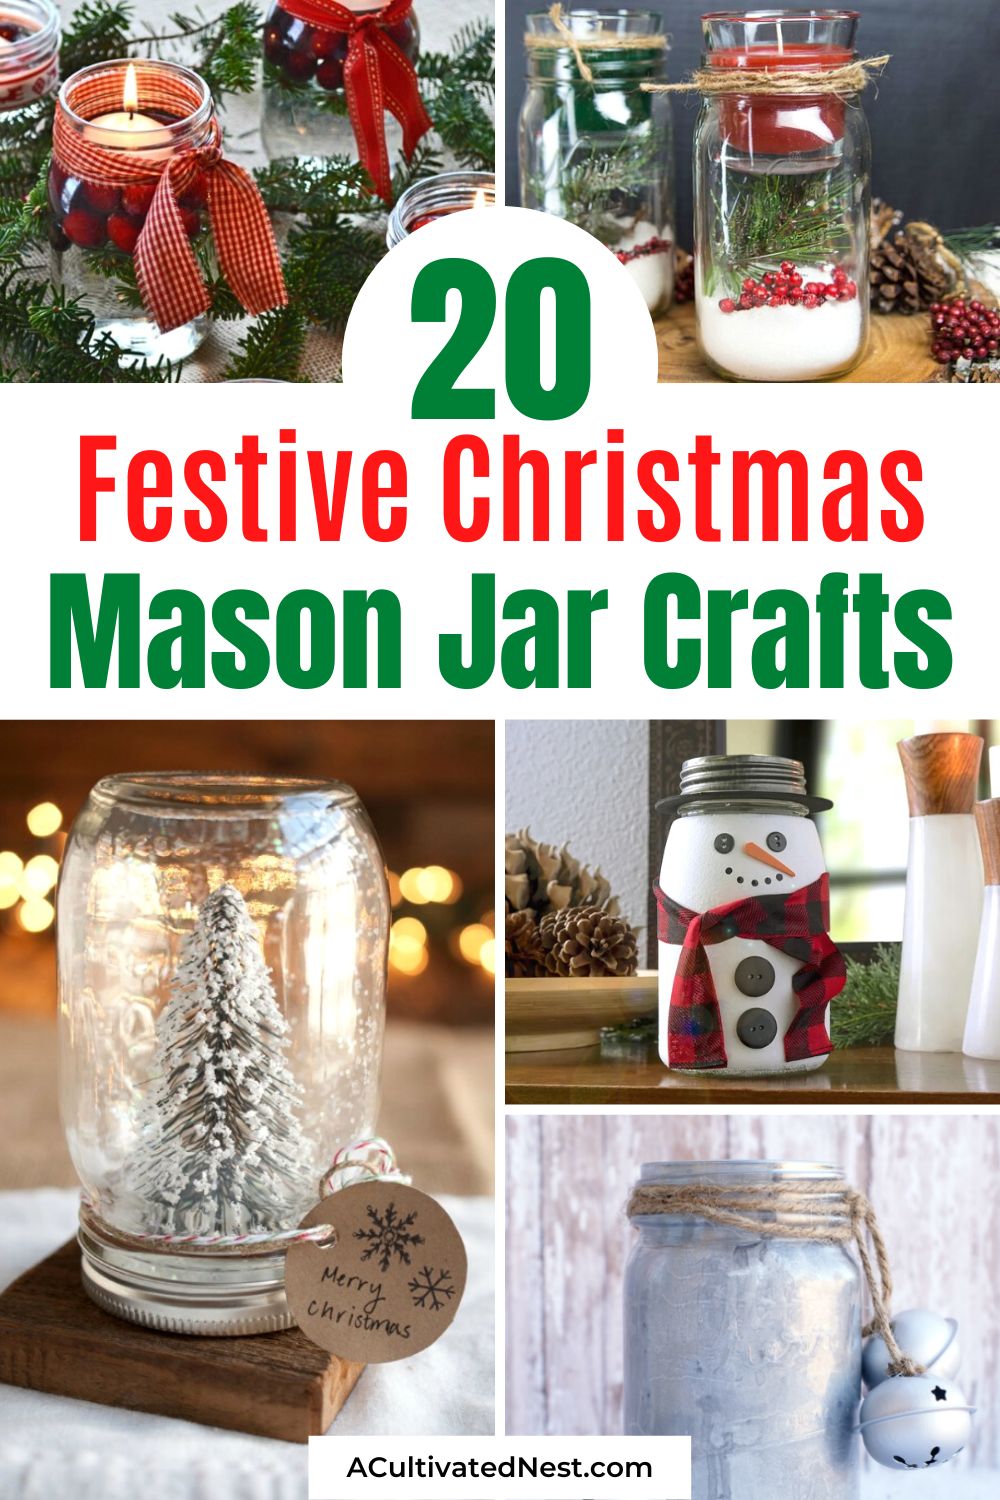 20 Festive Christmas Mason Jar Crafts